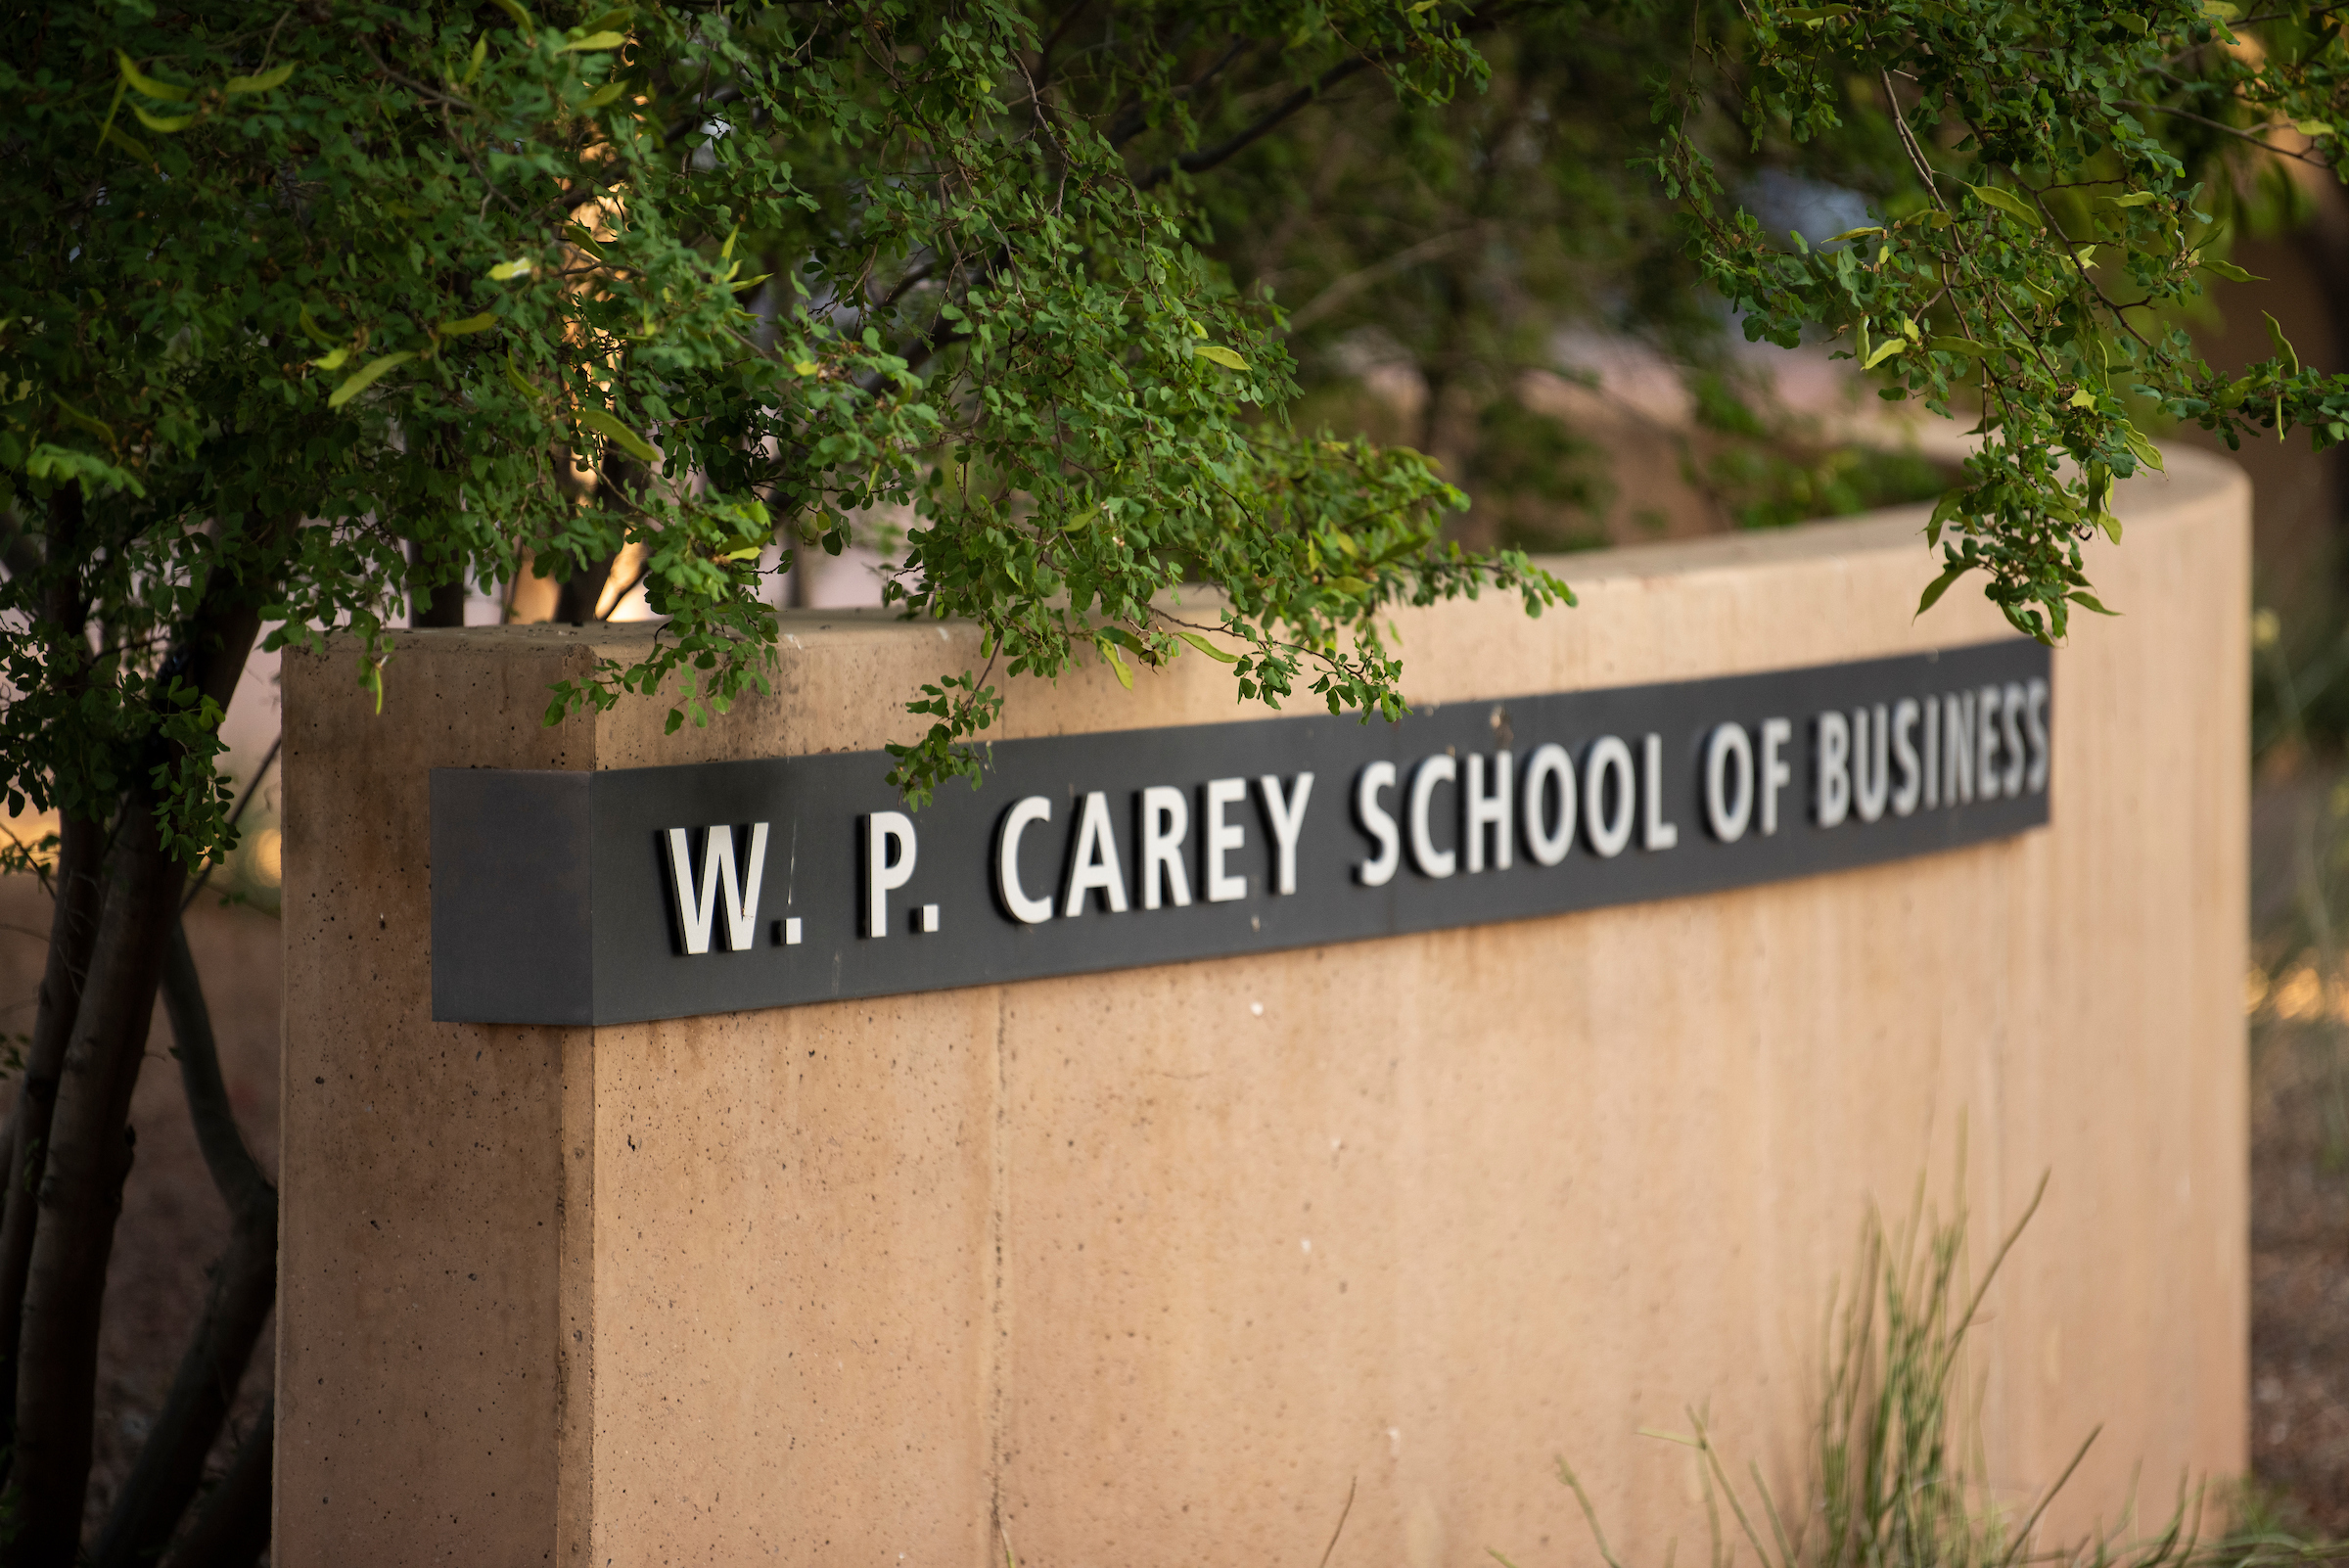 The W. P. Carey School of Business.